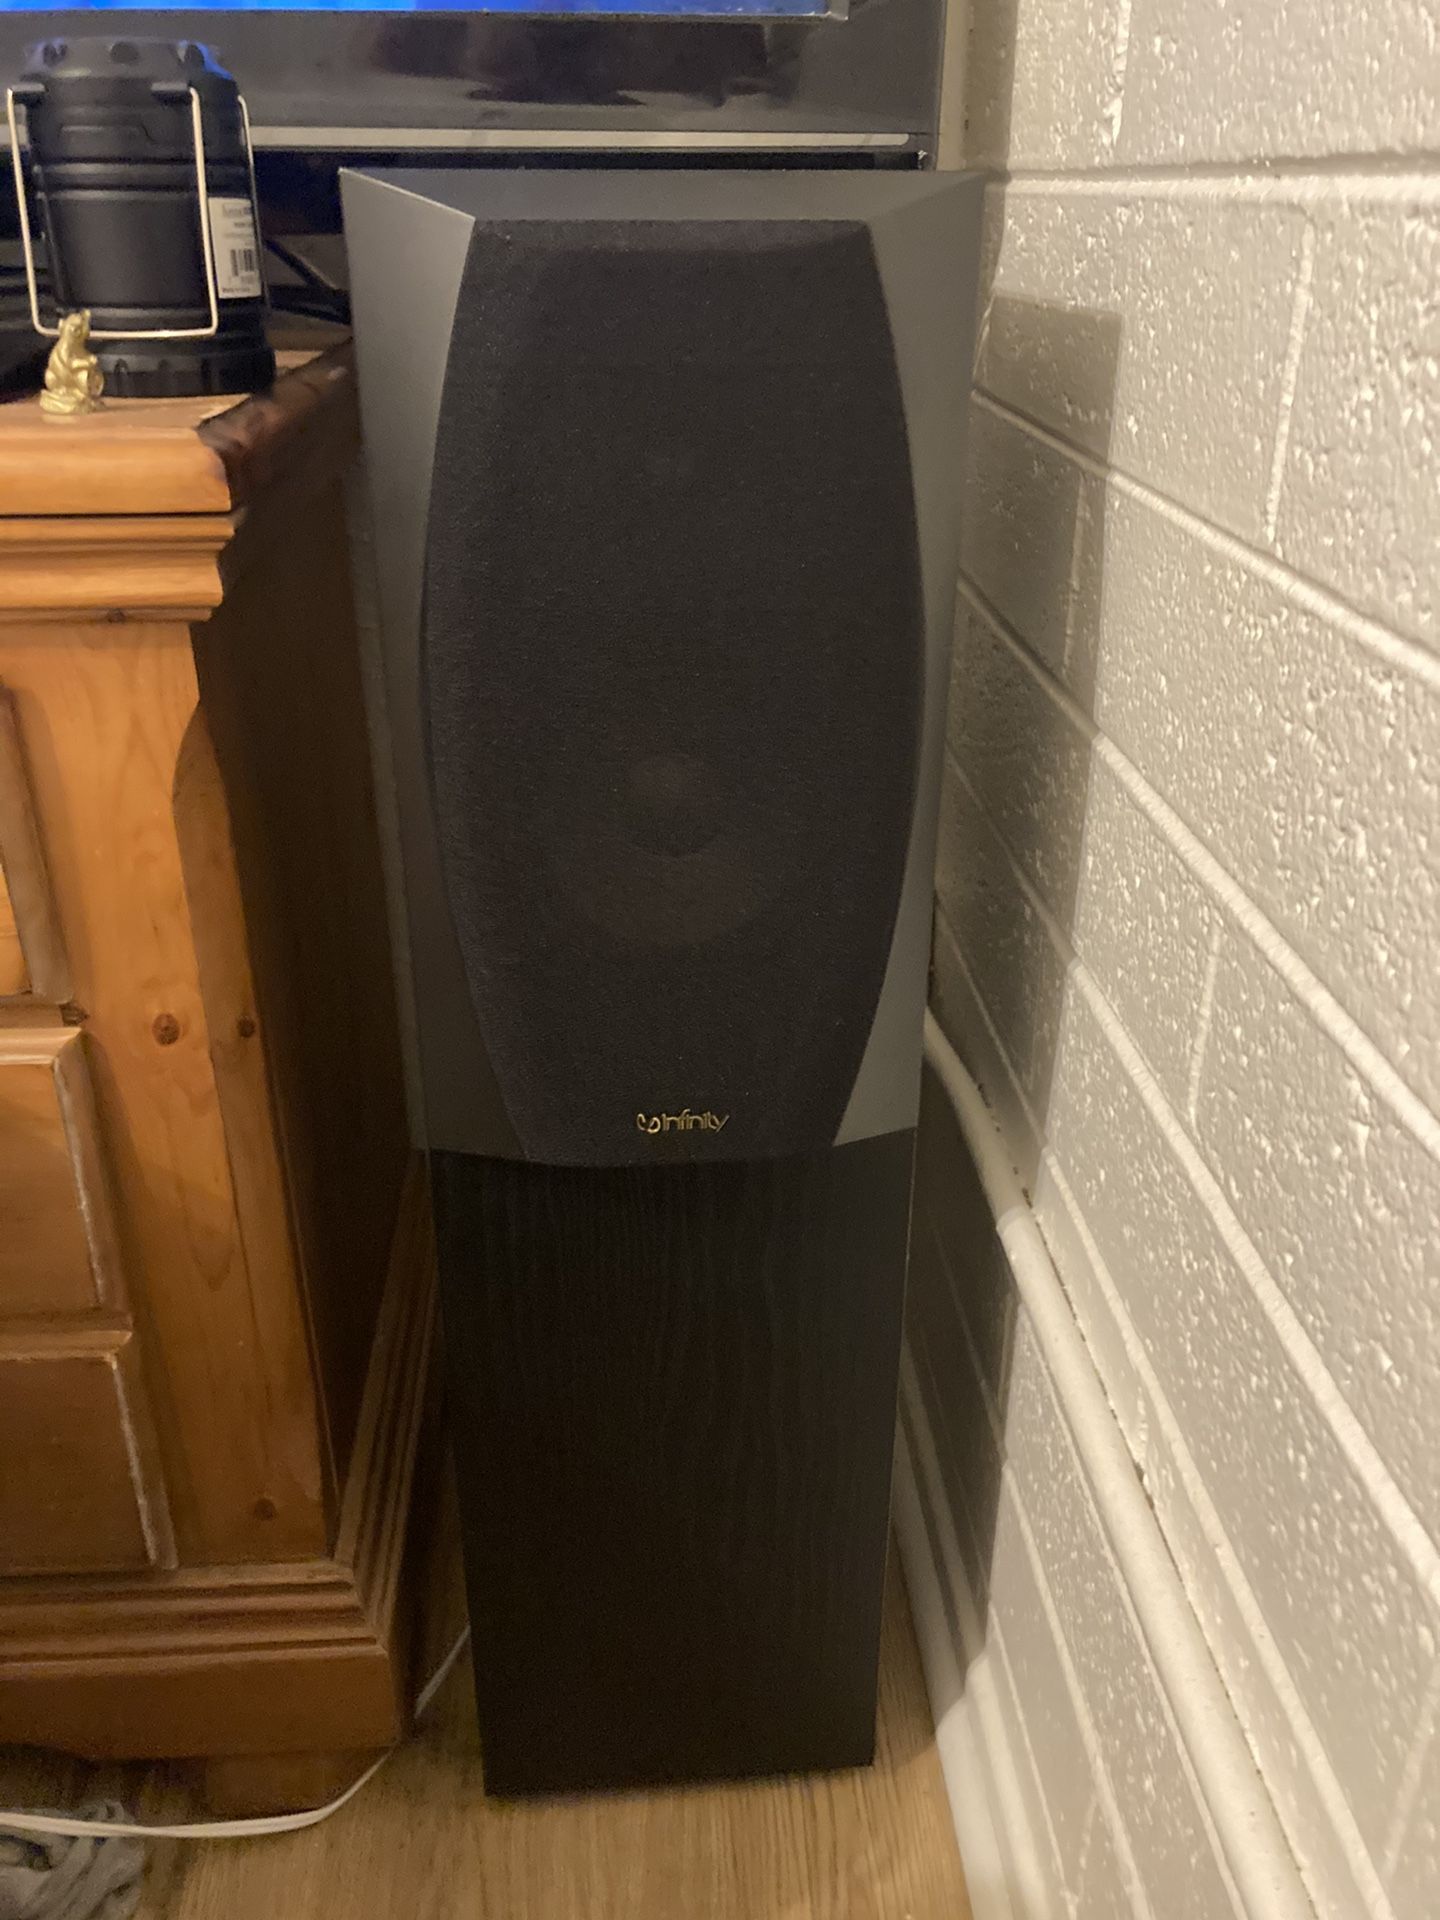 Home Audio Surround Sound Floor Speakers